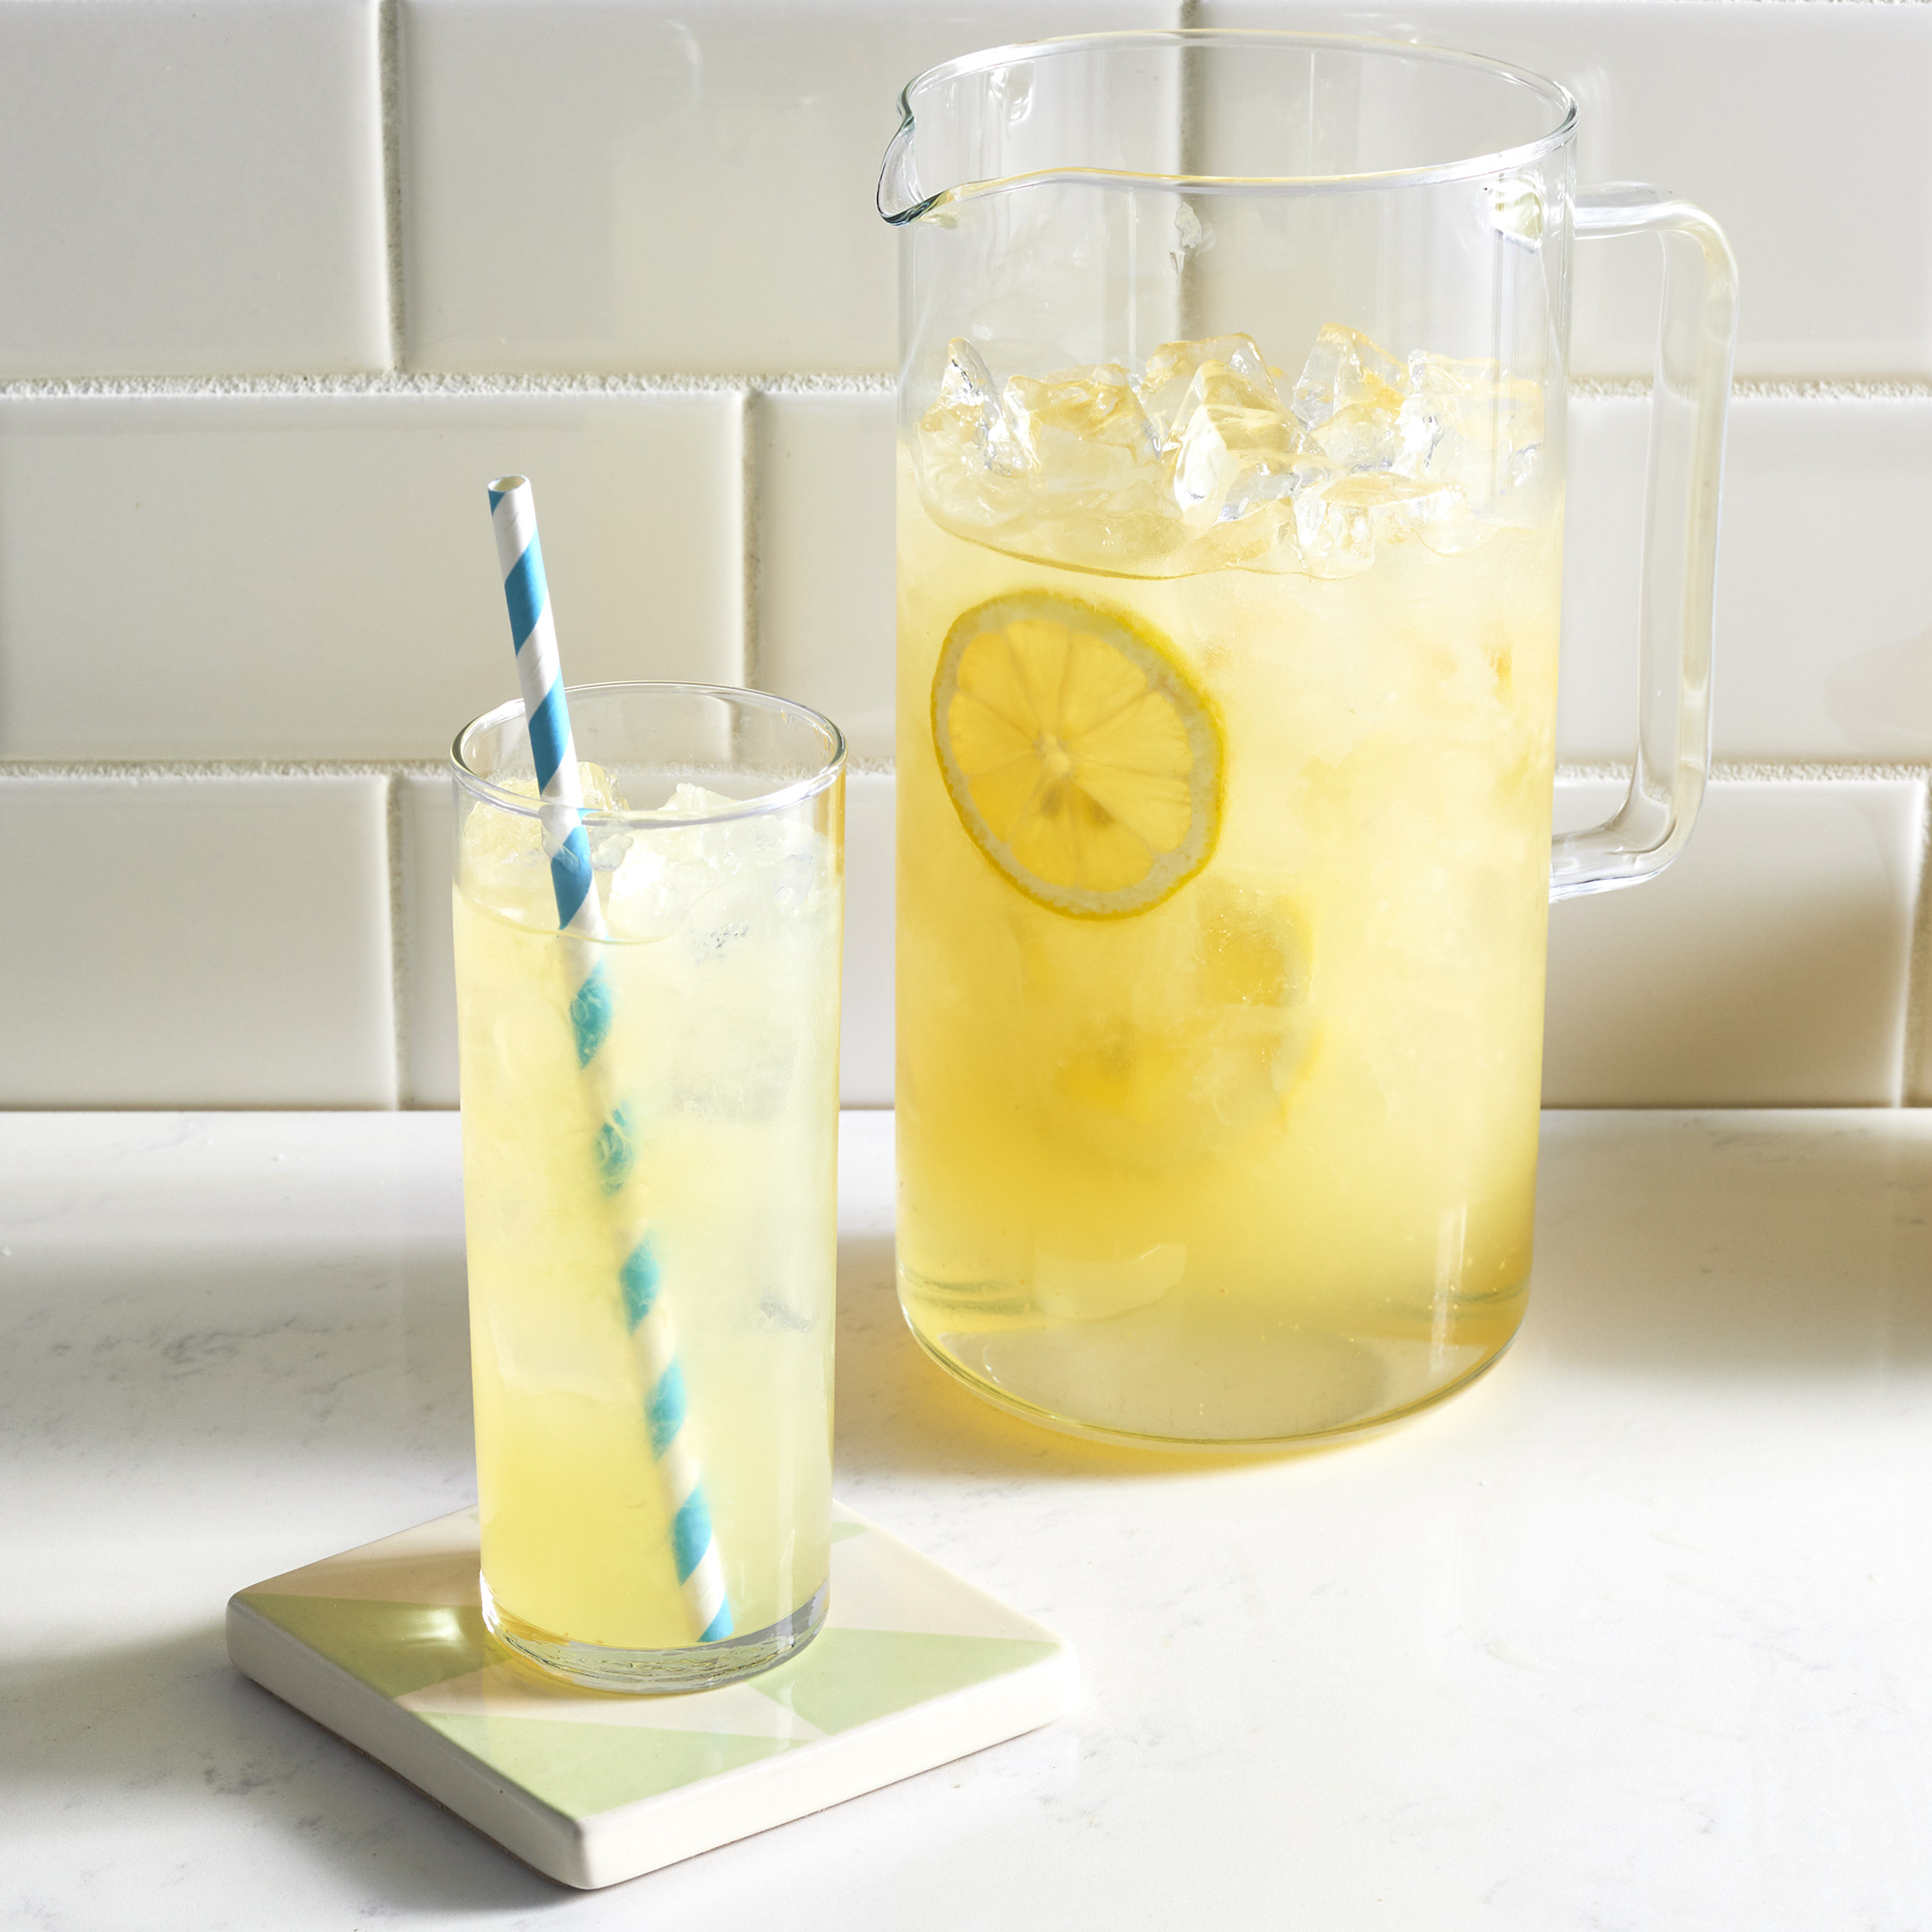 Best Lemonade Ever - Chick-Fil-A's Best Lemonade Ever Recipe